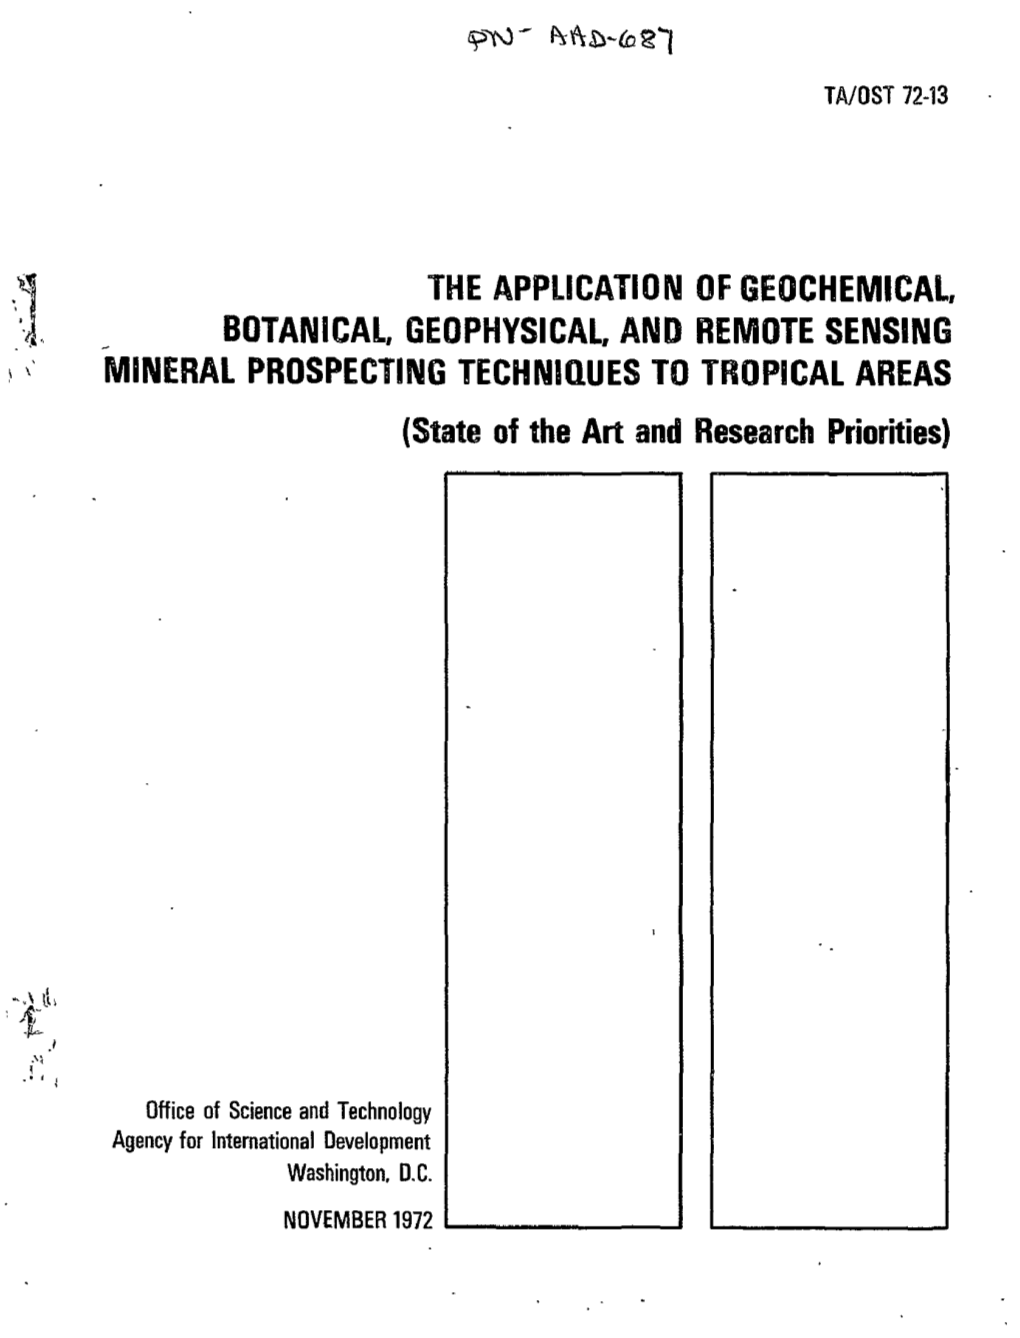 the Application of Geochemical, Botanical